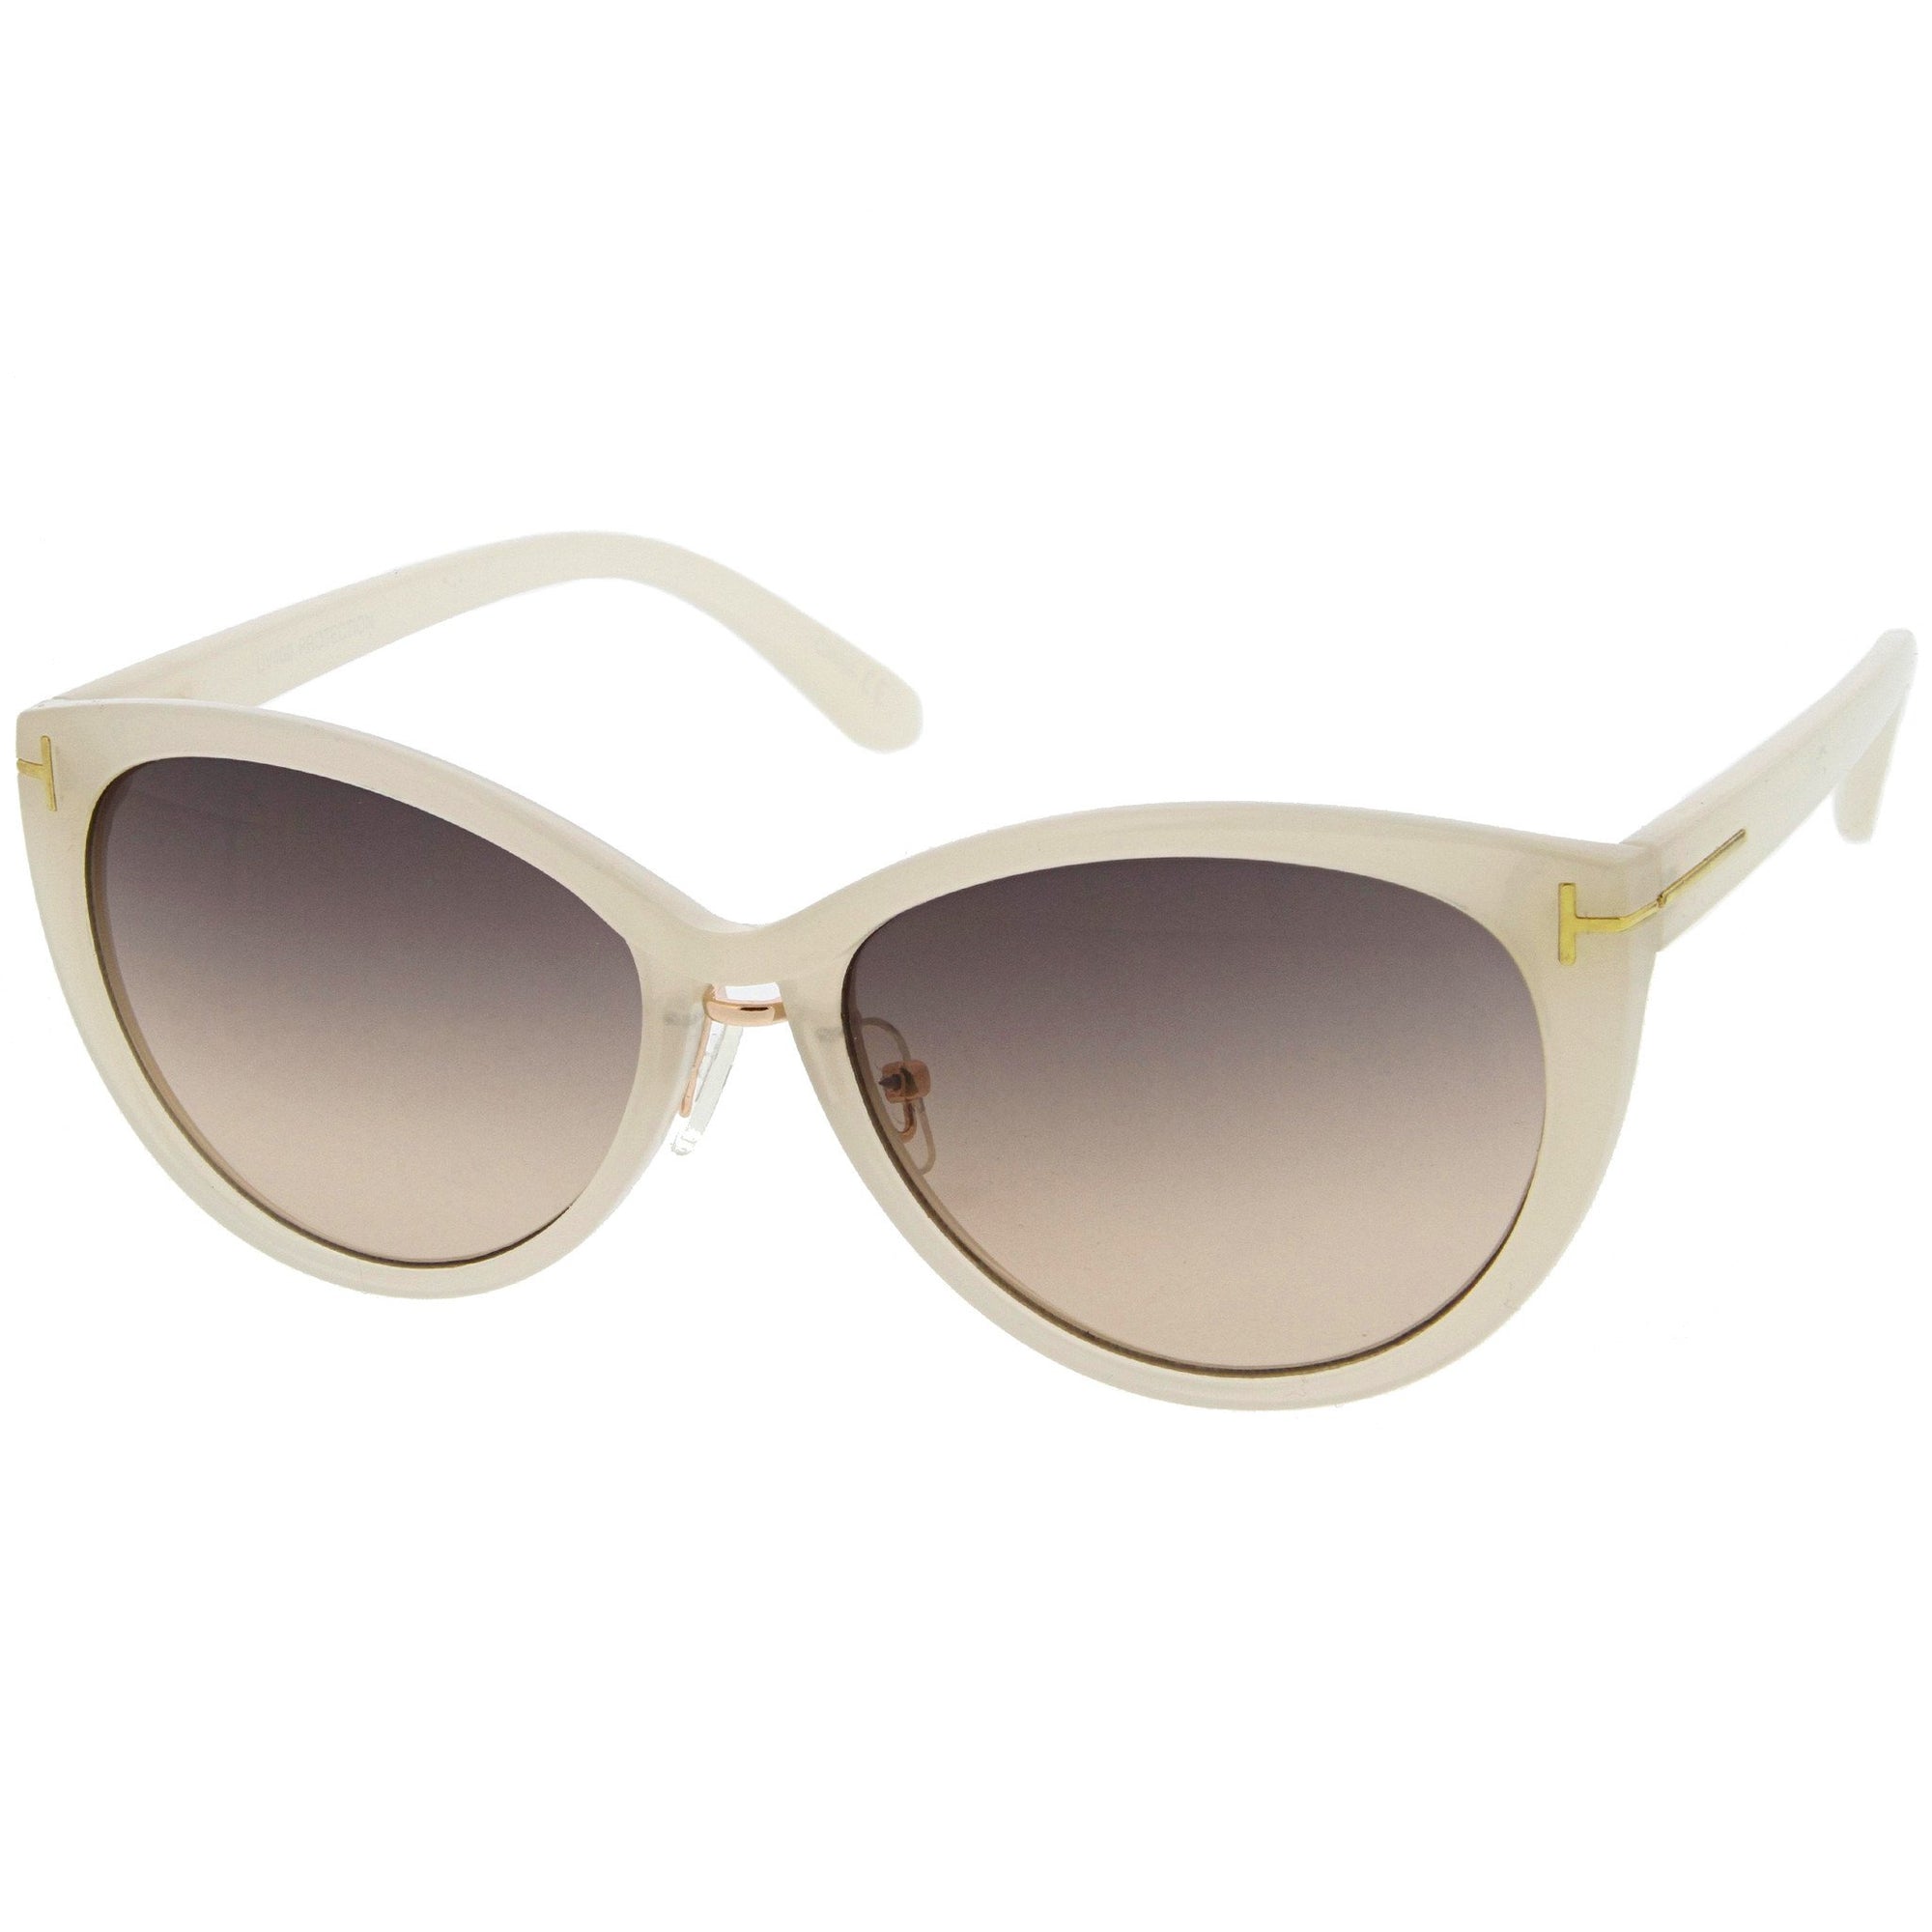 Women's European Oval Cat Eye Sunglasses - zeroUV